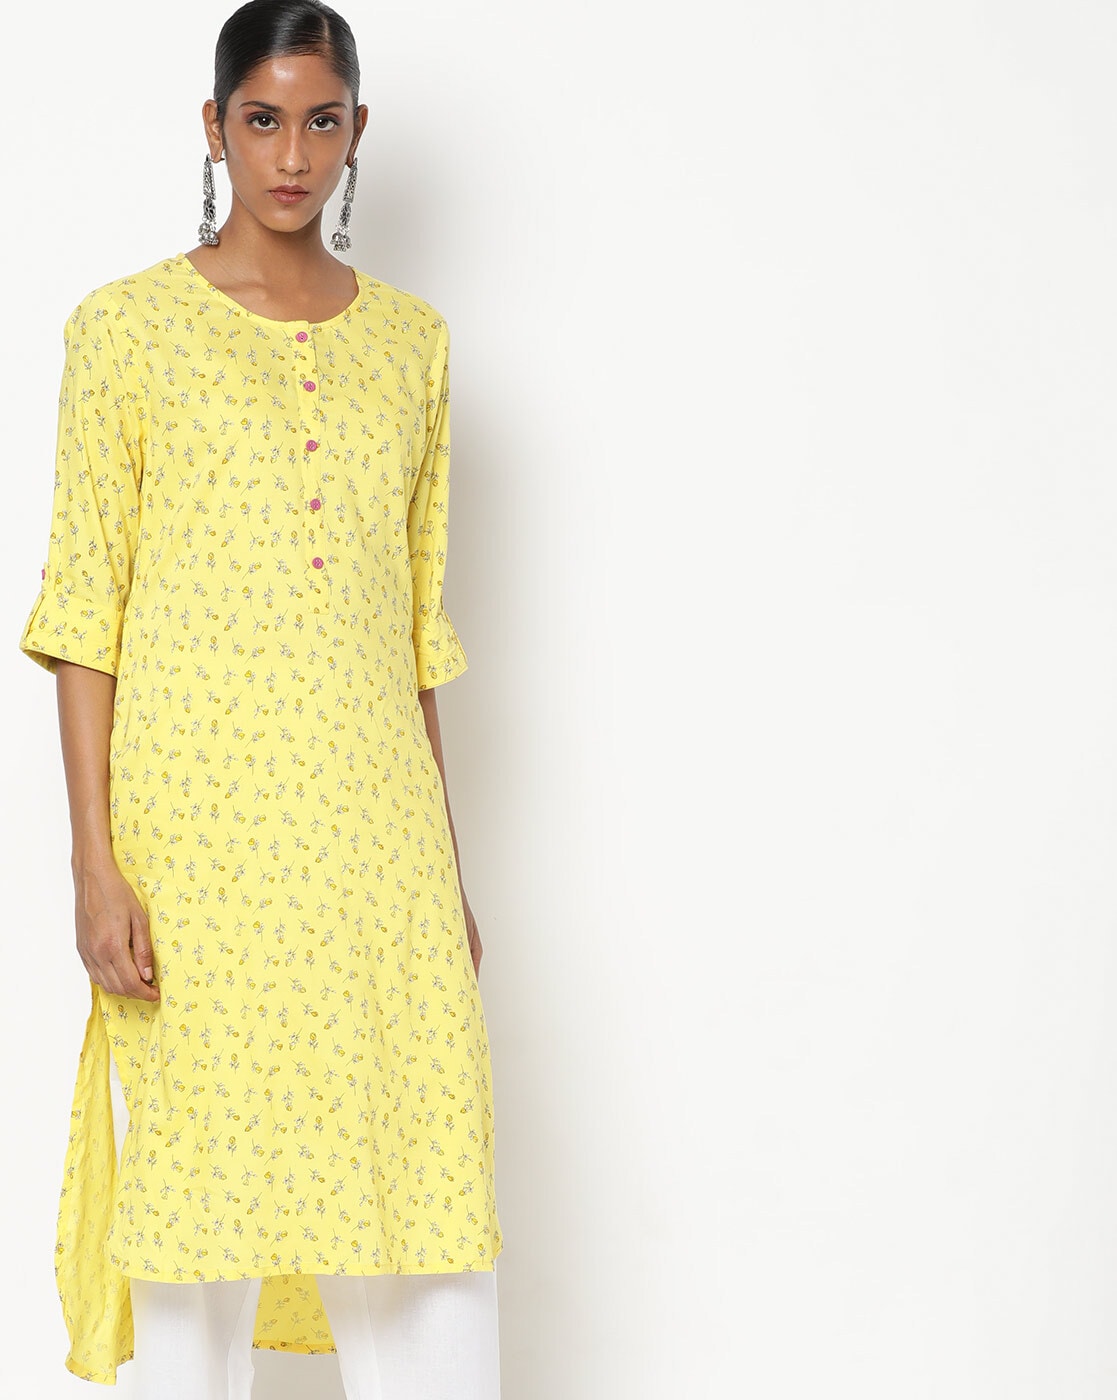 Reliance Trends Kurthis Haul  Kurtis Collections Discount Offers   Latest Womens Kurtis Haul  YouTube  Fancy dress design Women Kurti